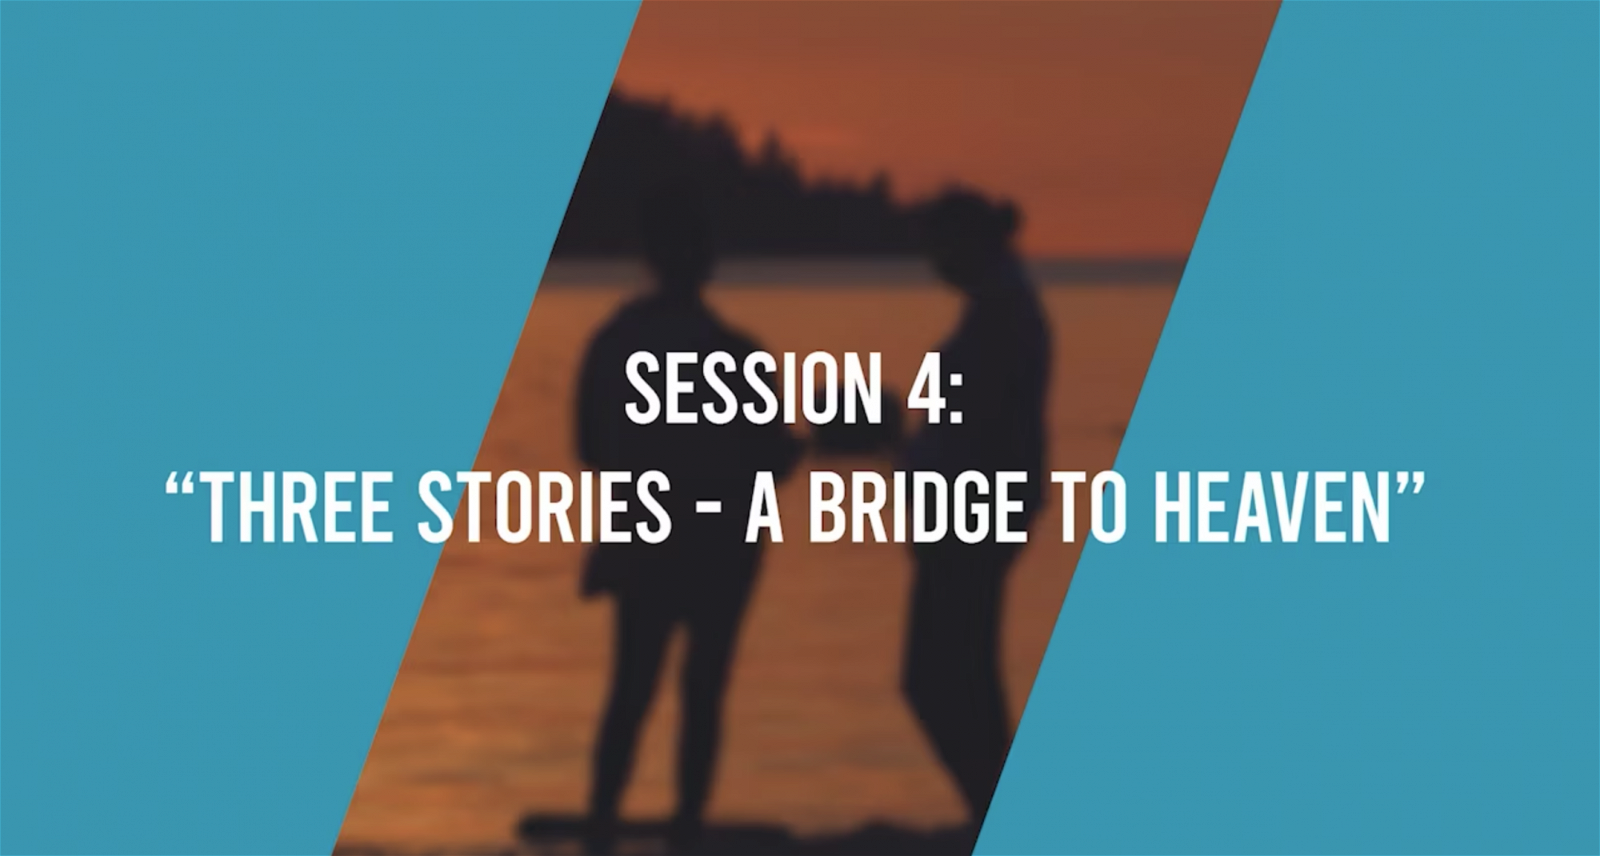 Session 4: Three Stories - A Bridge to Heaven